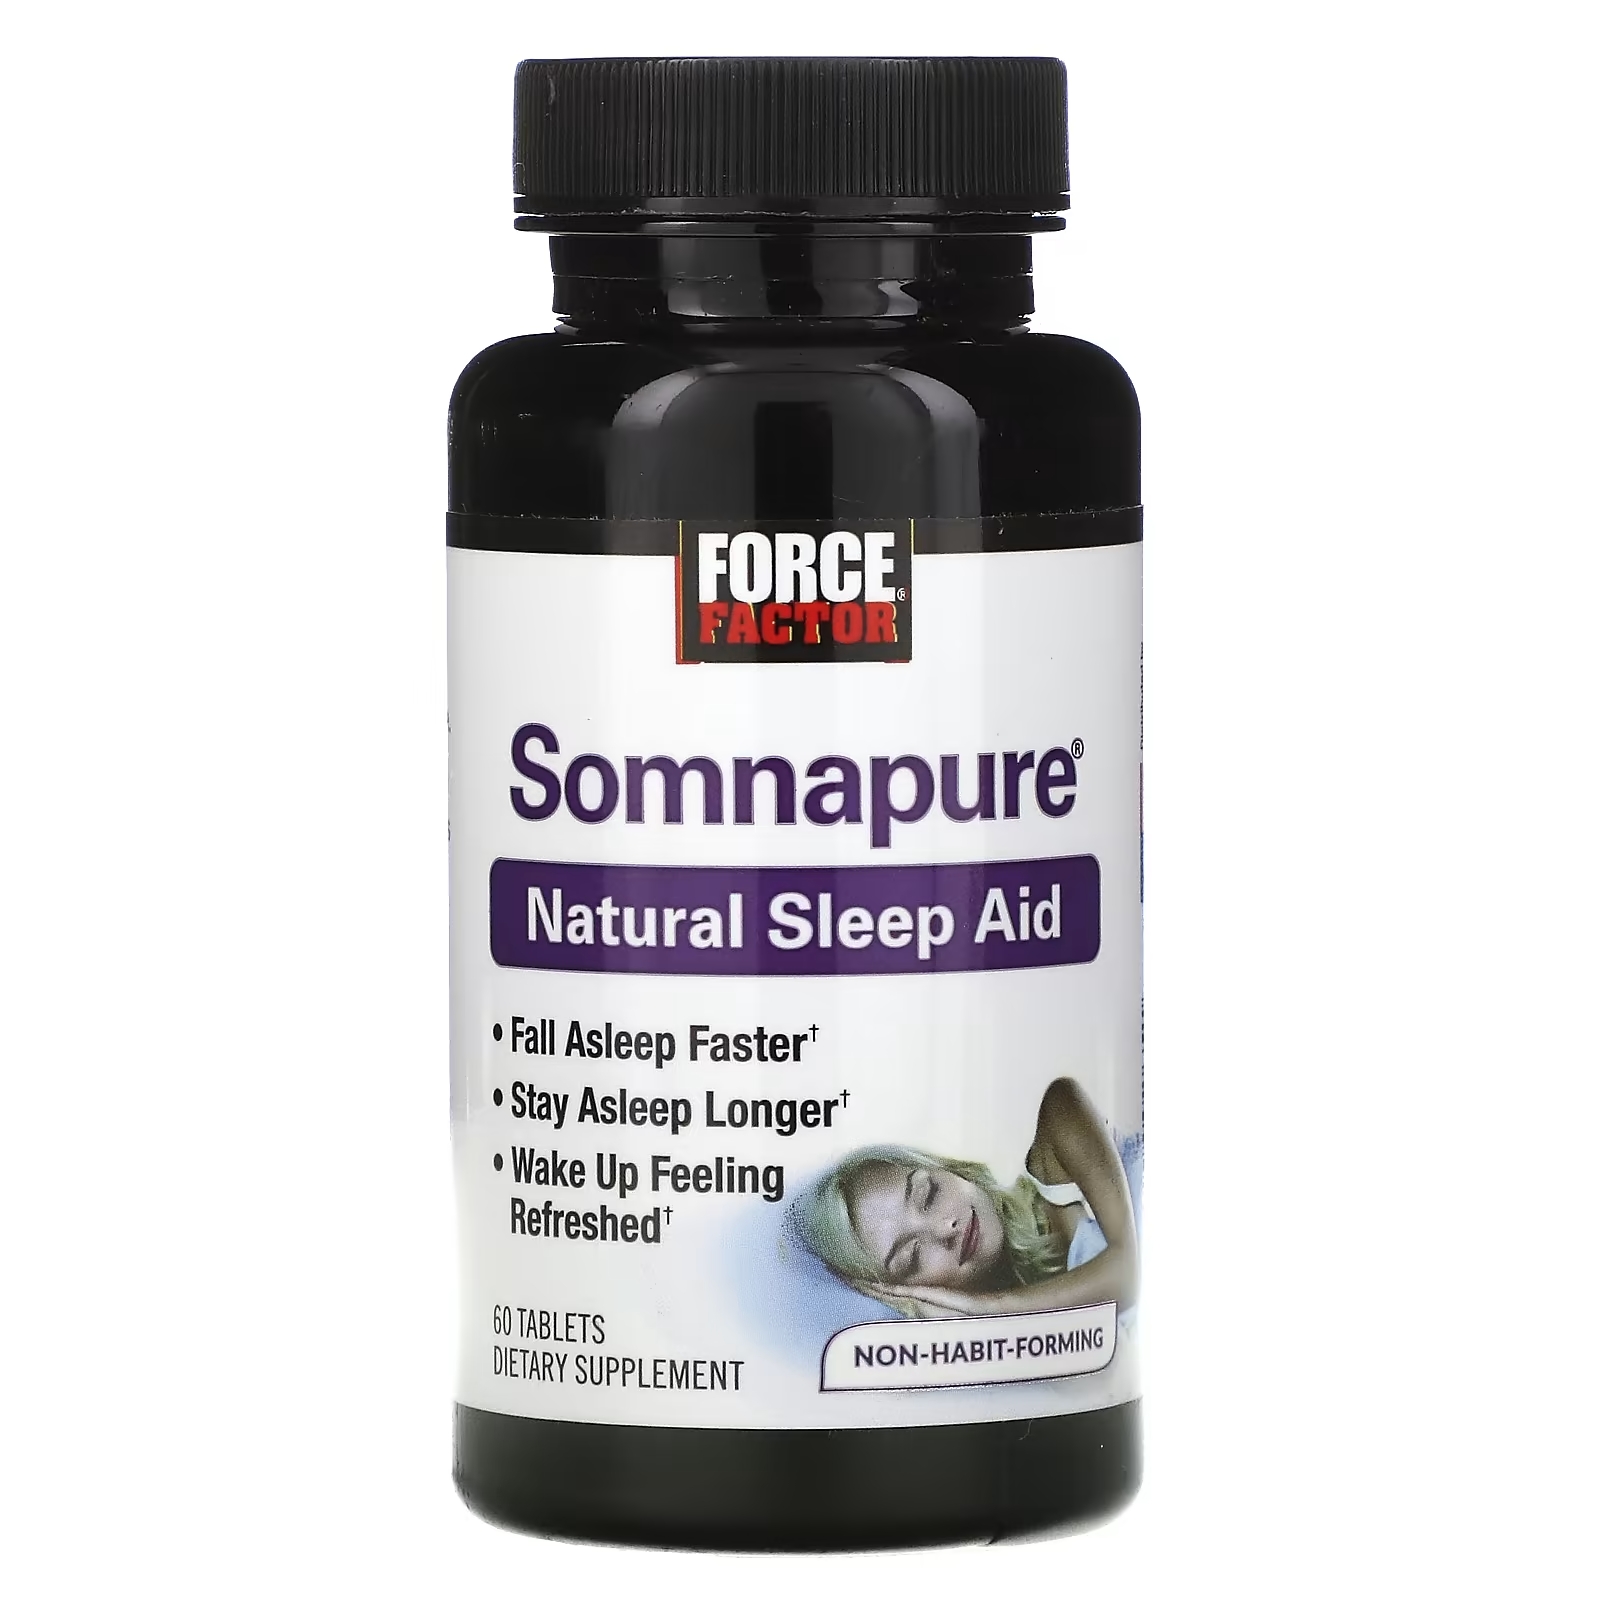 Force Factor Somnapure натурально средство для сна, 60 таблеток